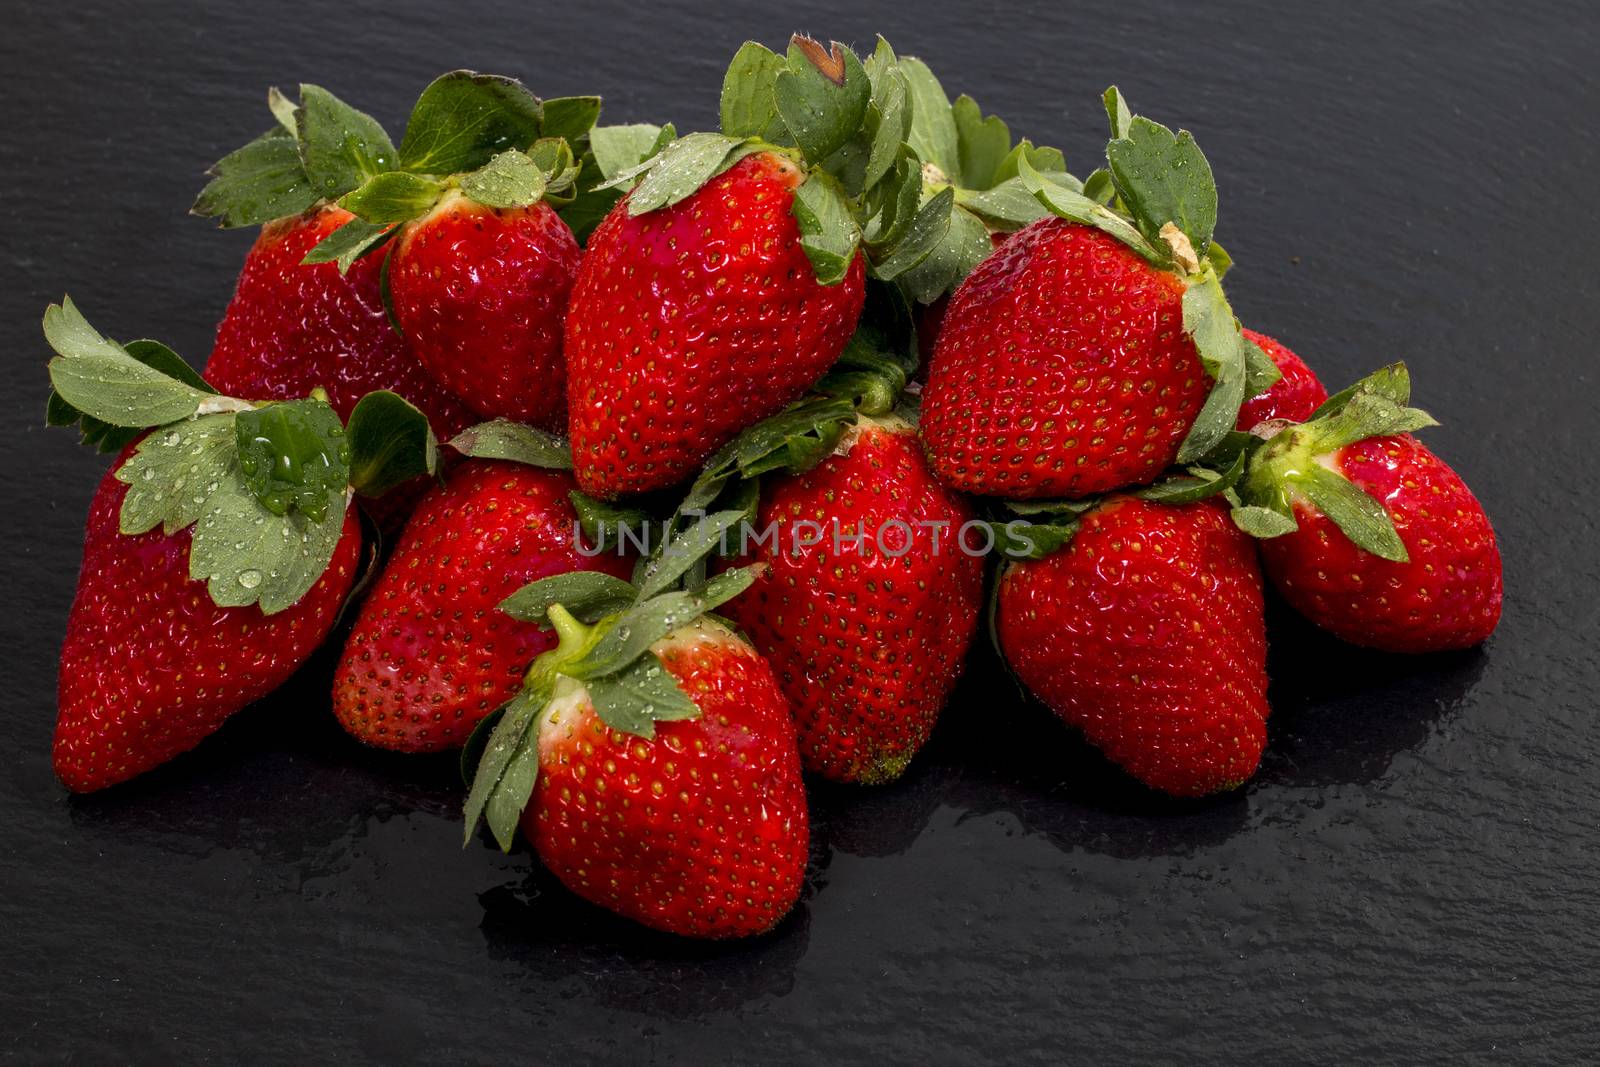 Red tasty strawberries on a black slab of schist.